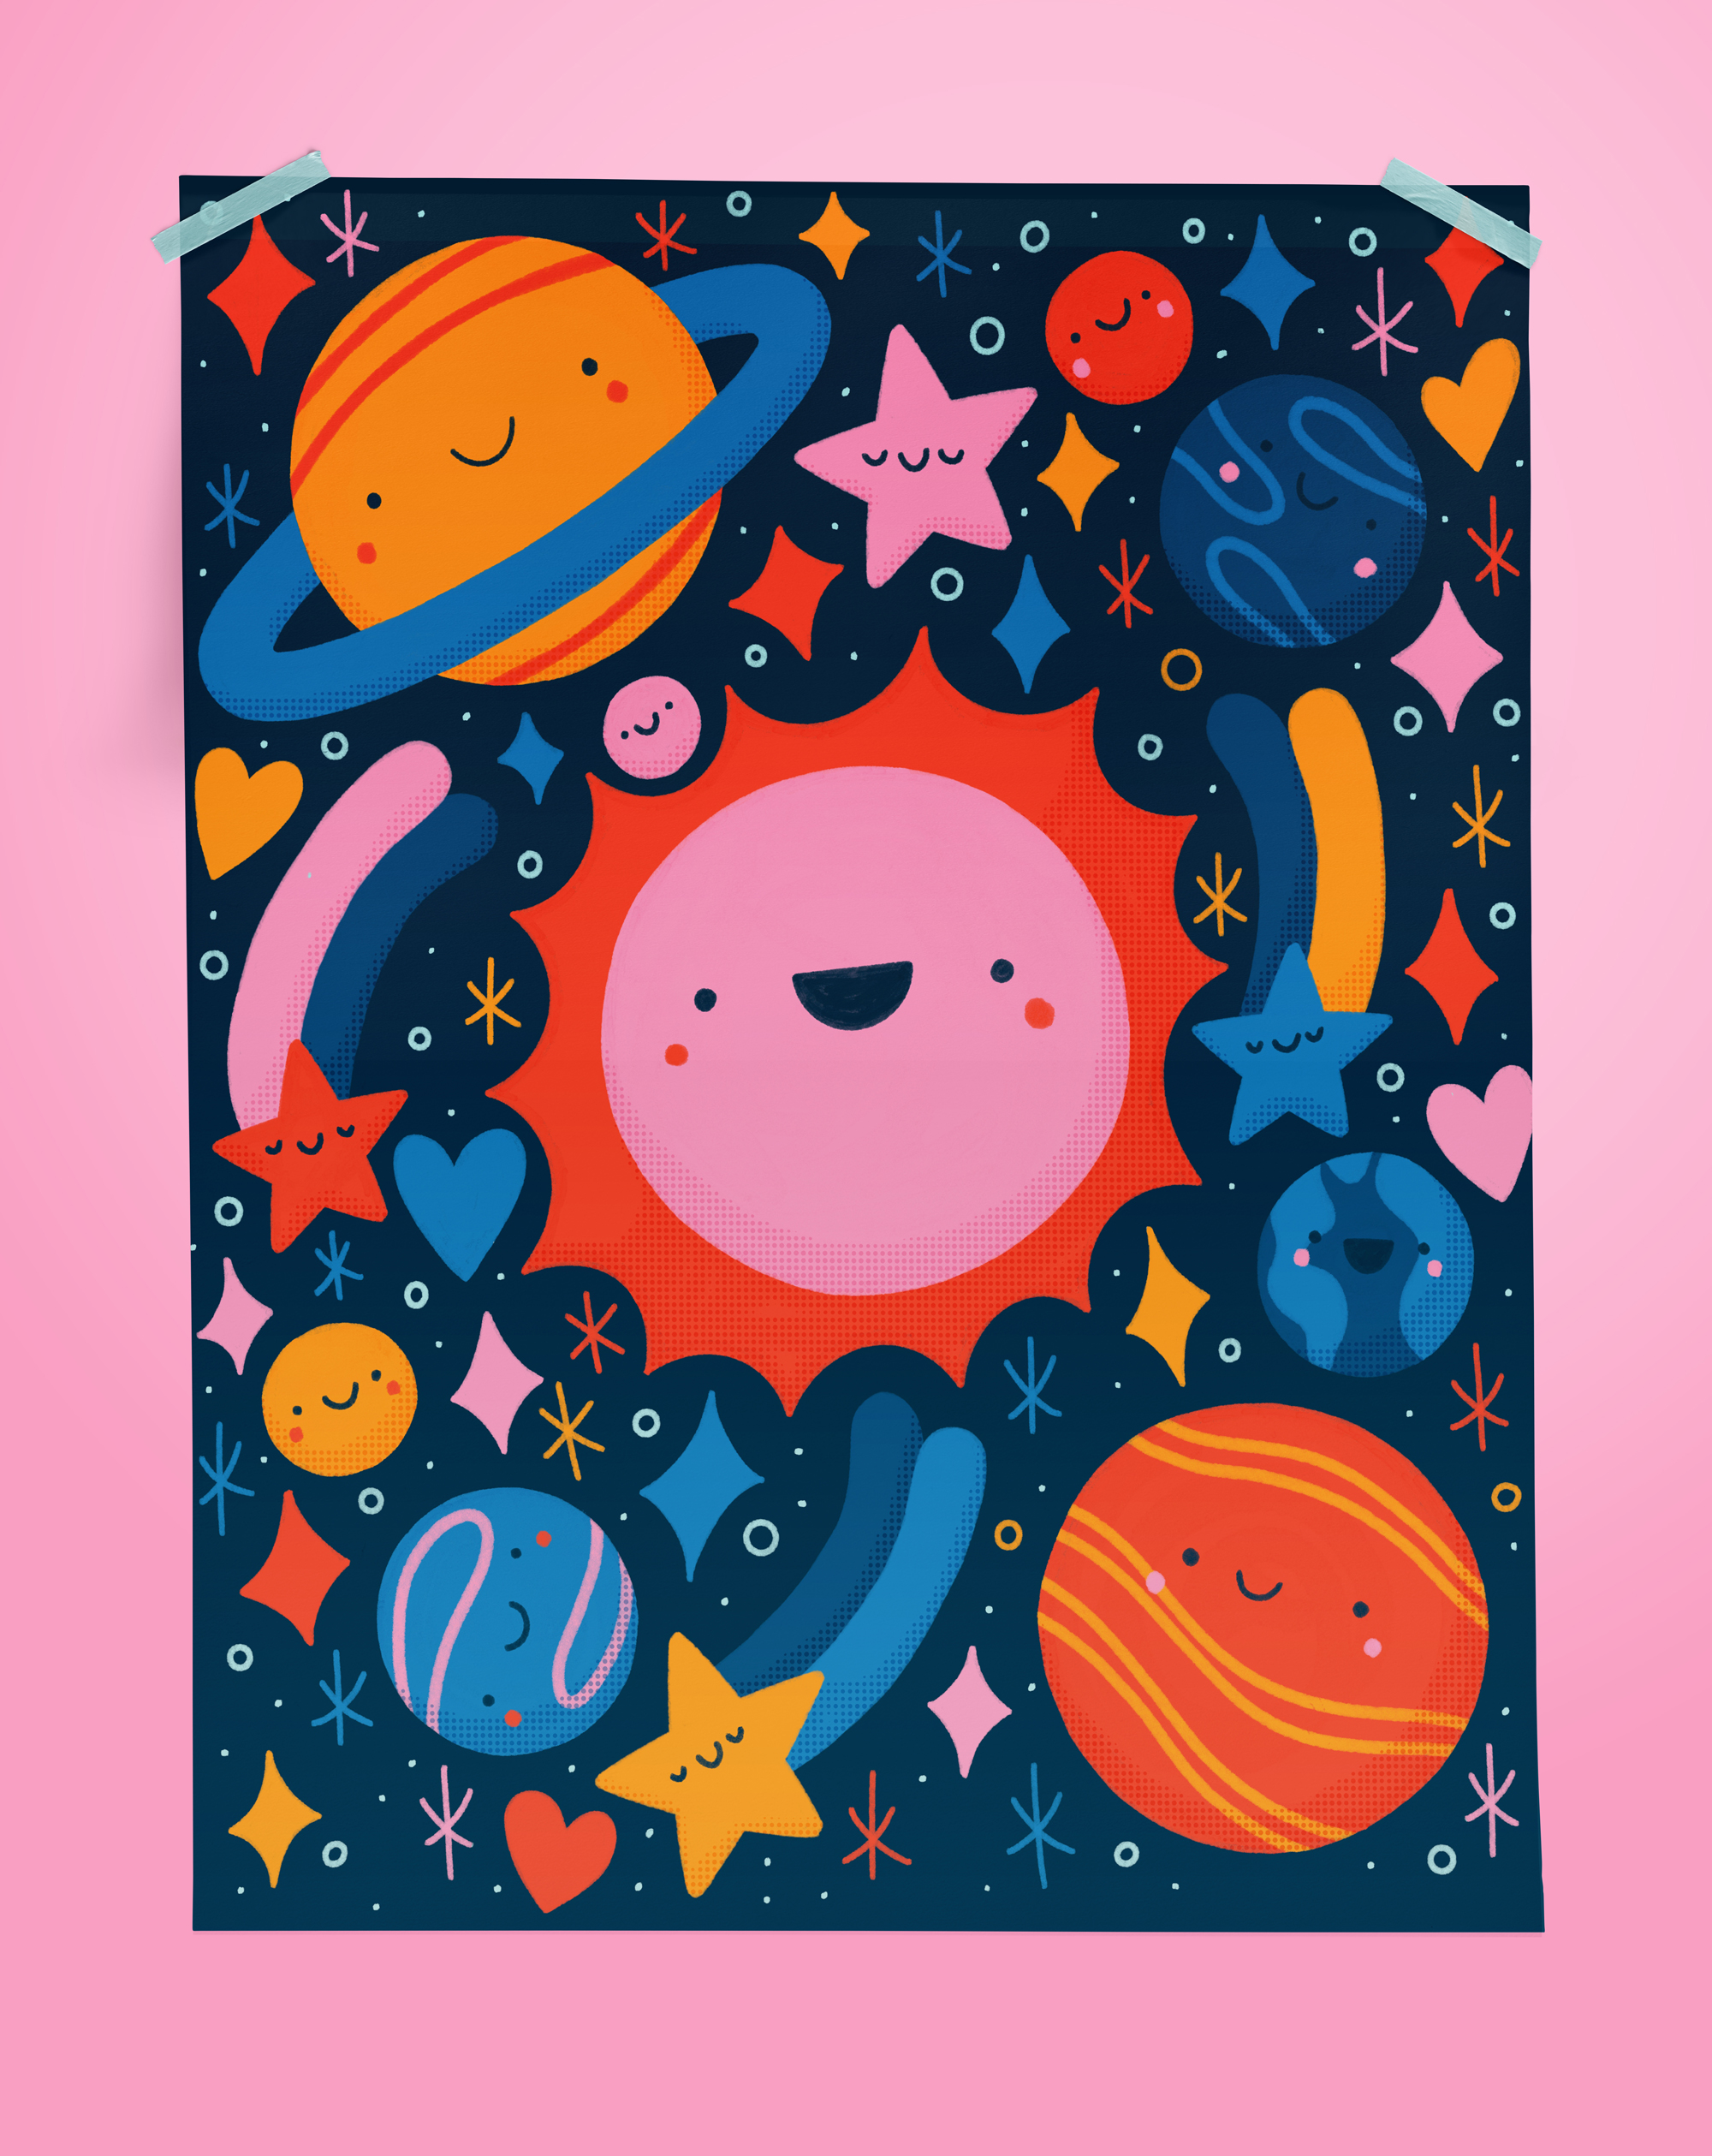 Kawaii Illustration of our Solar System